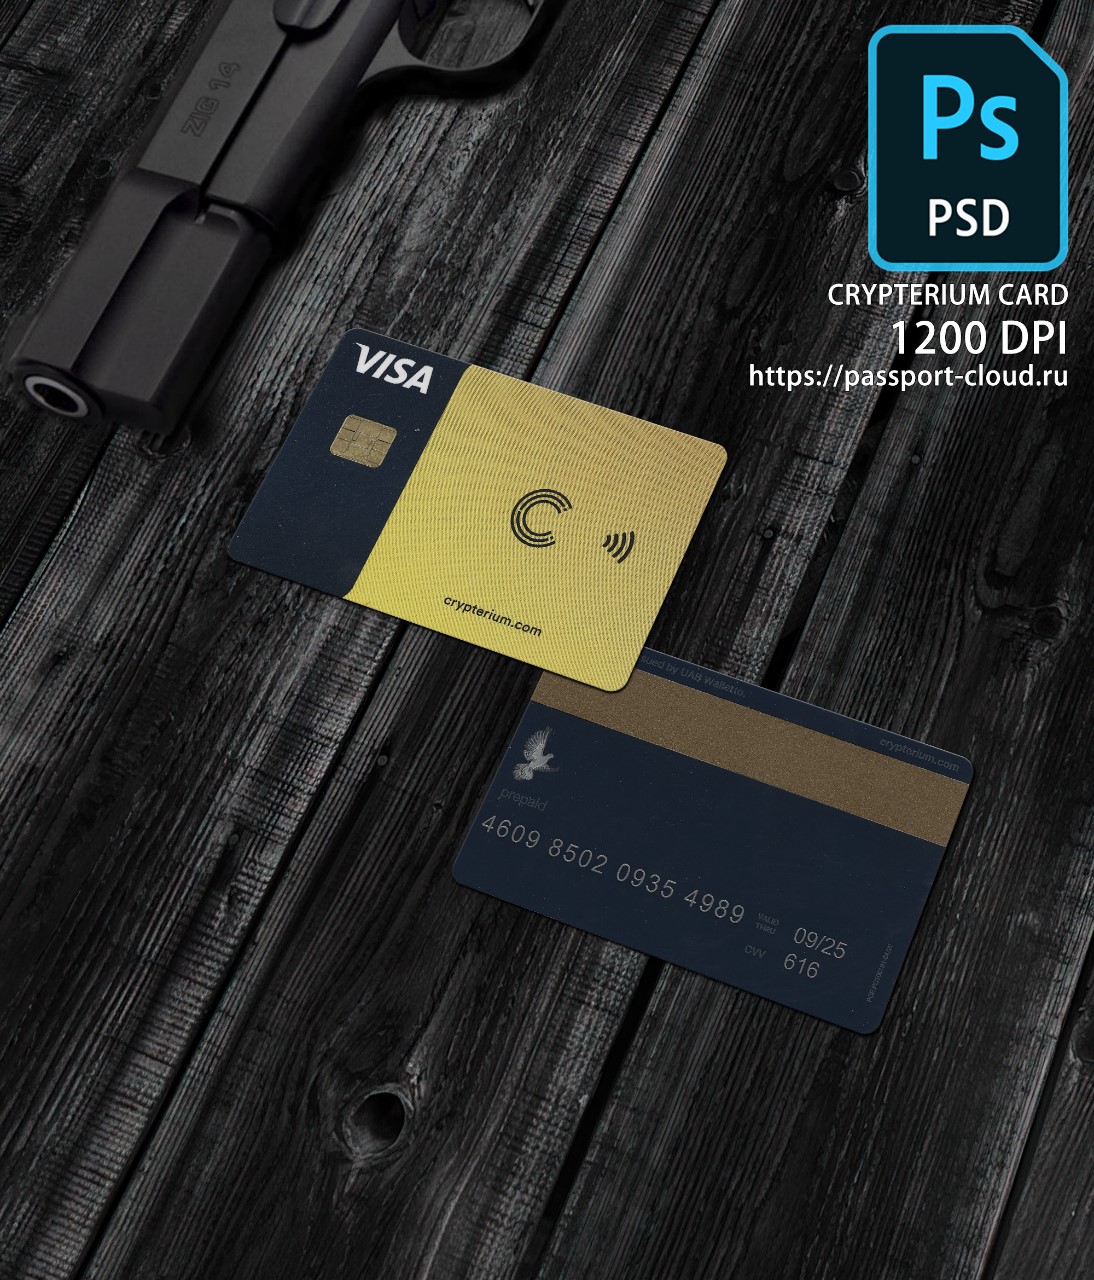 Crypterium Card PSD1